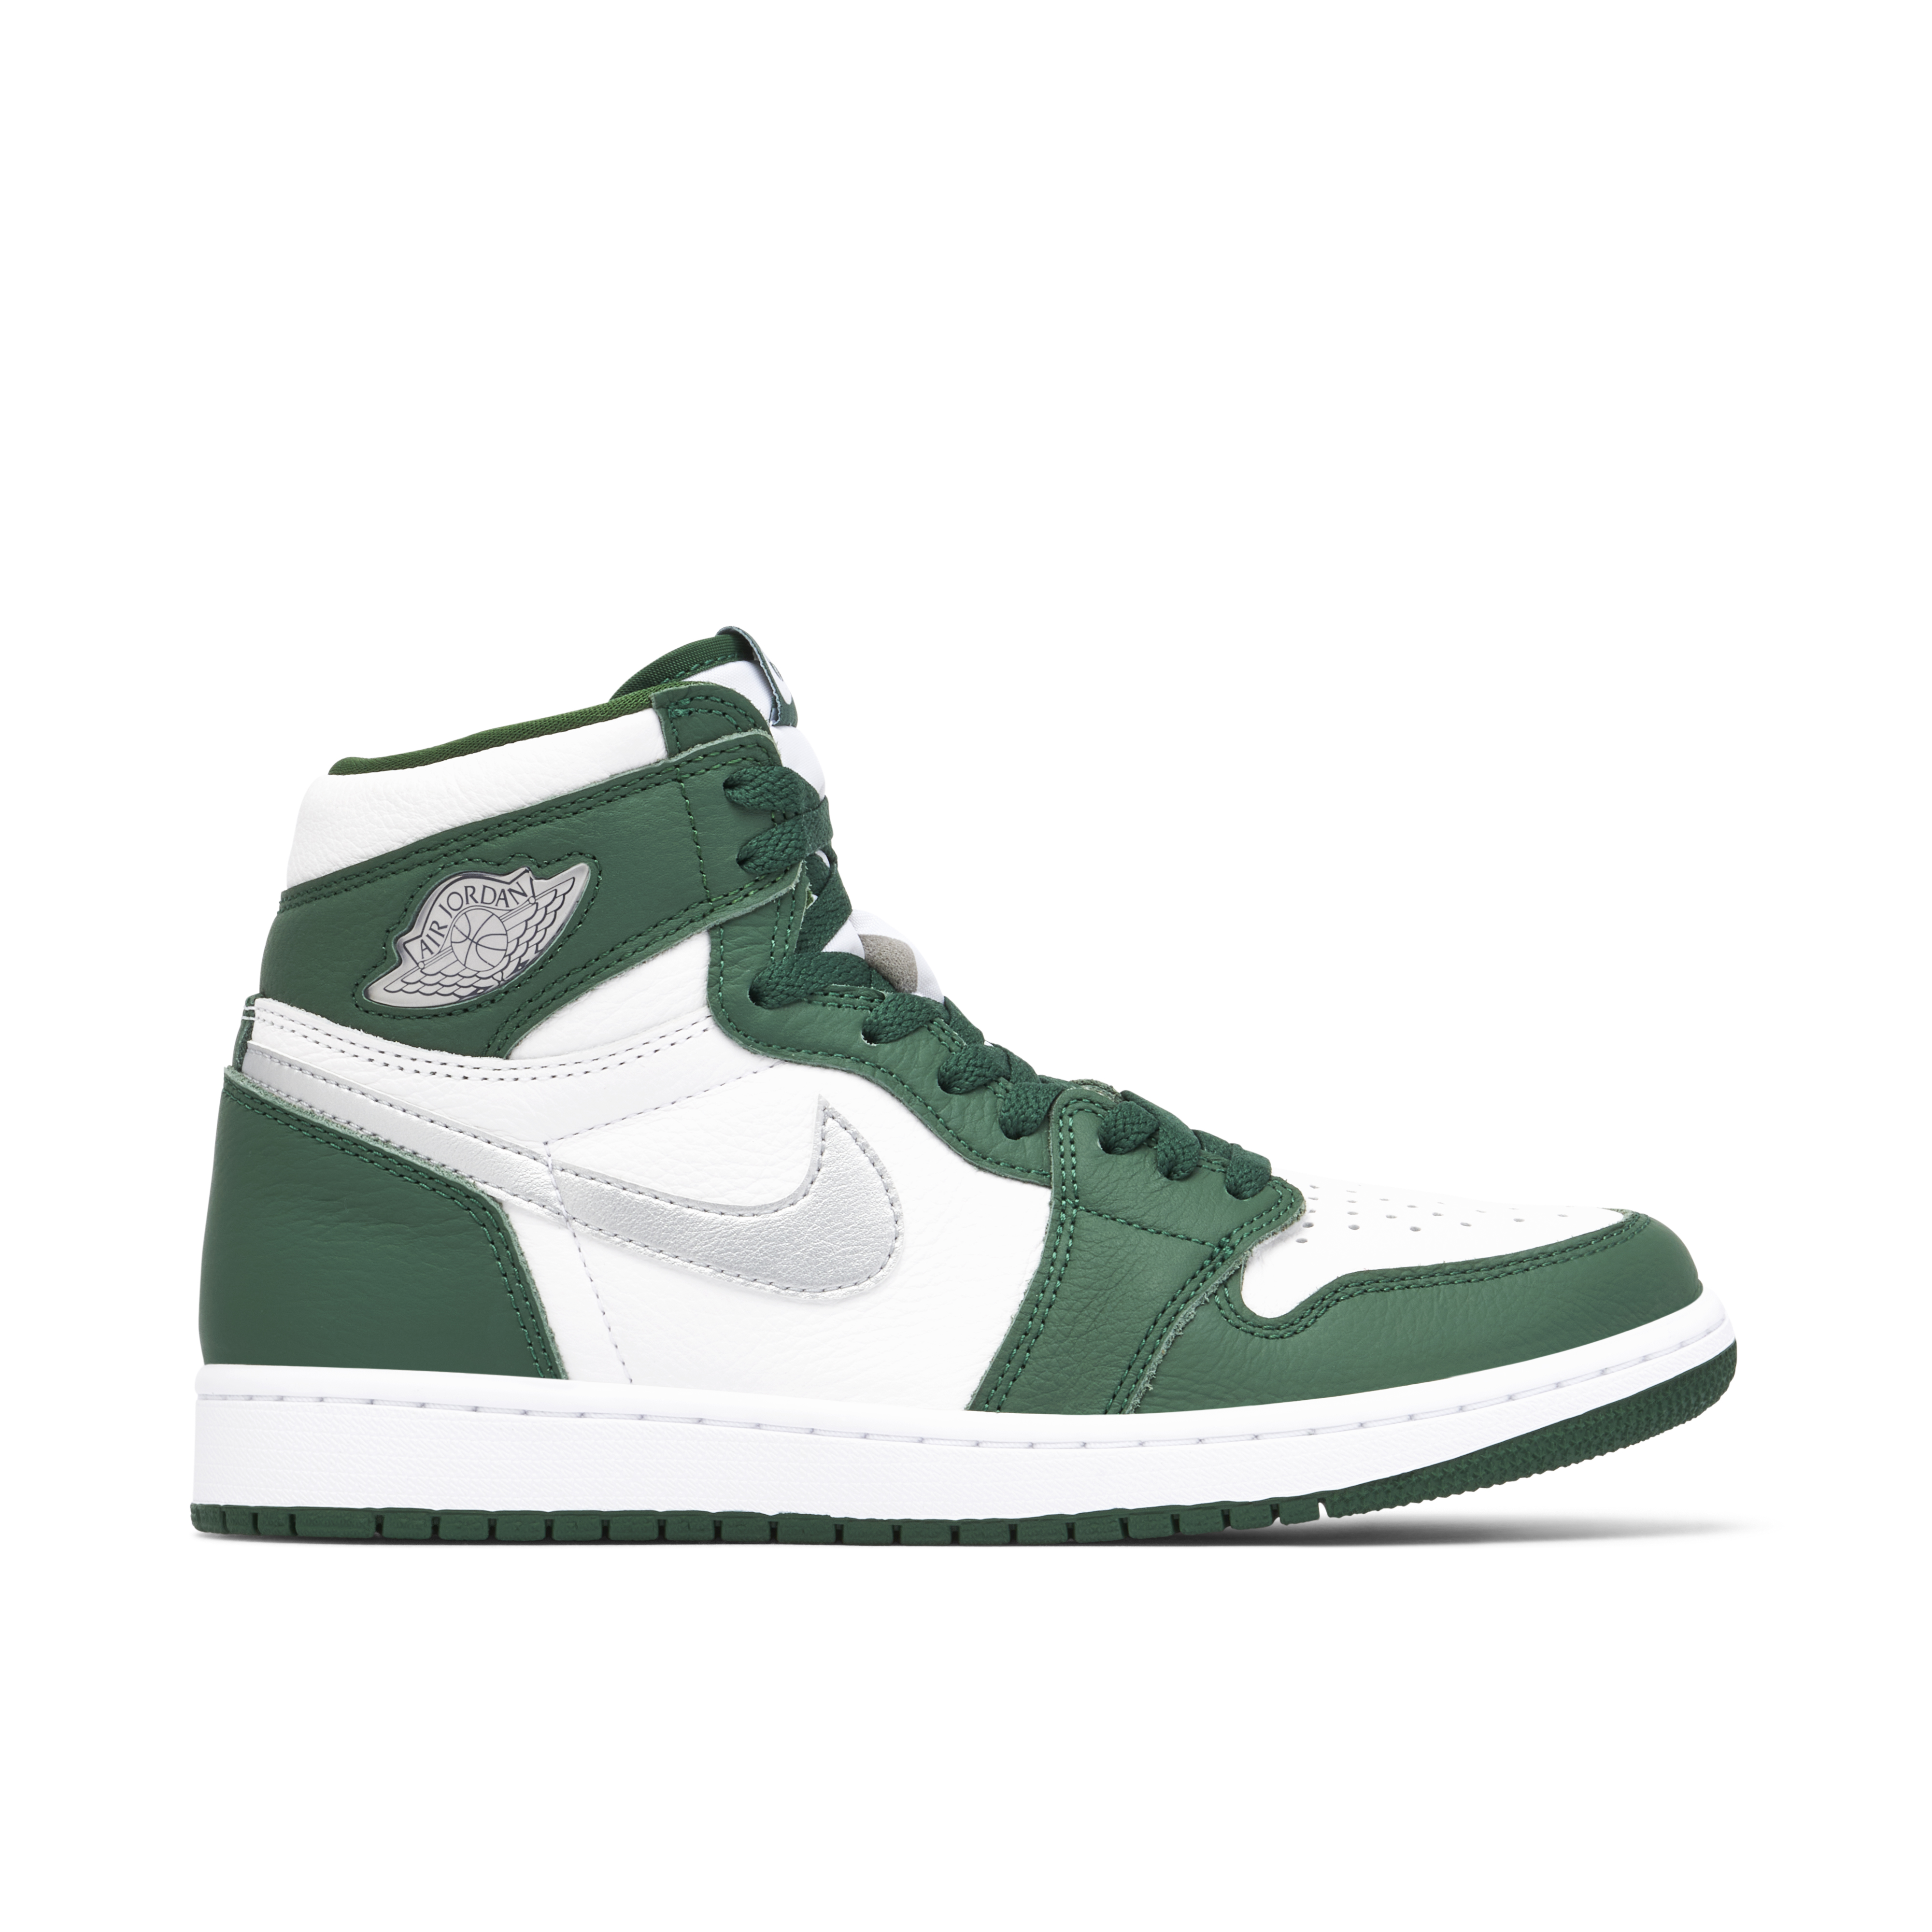 green air jordan shoes